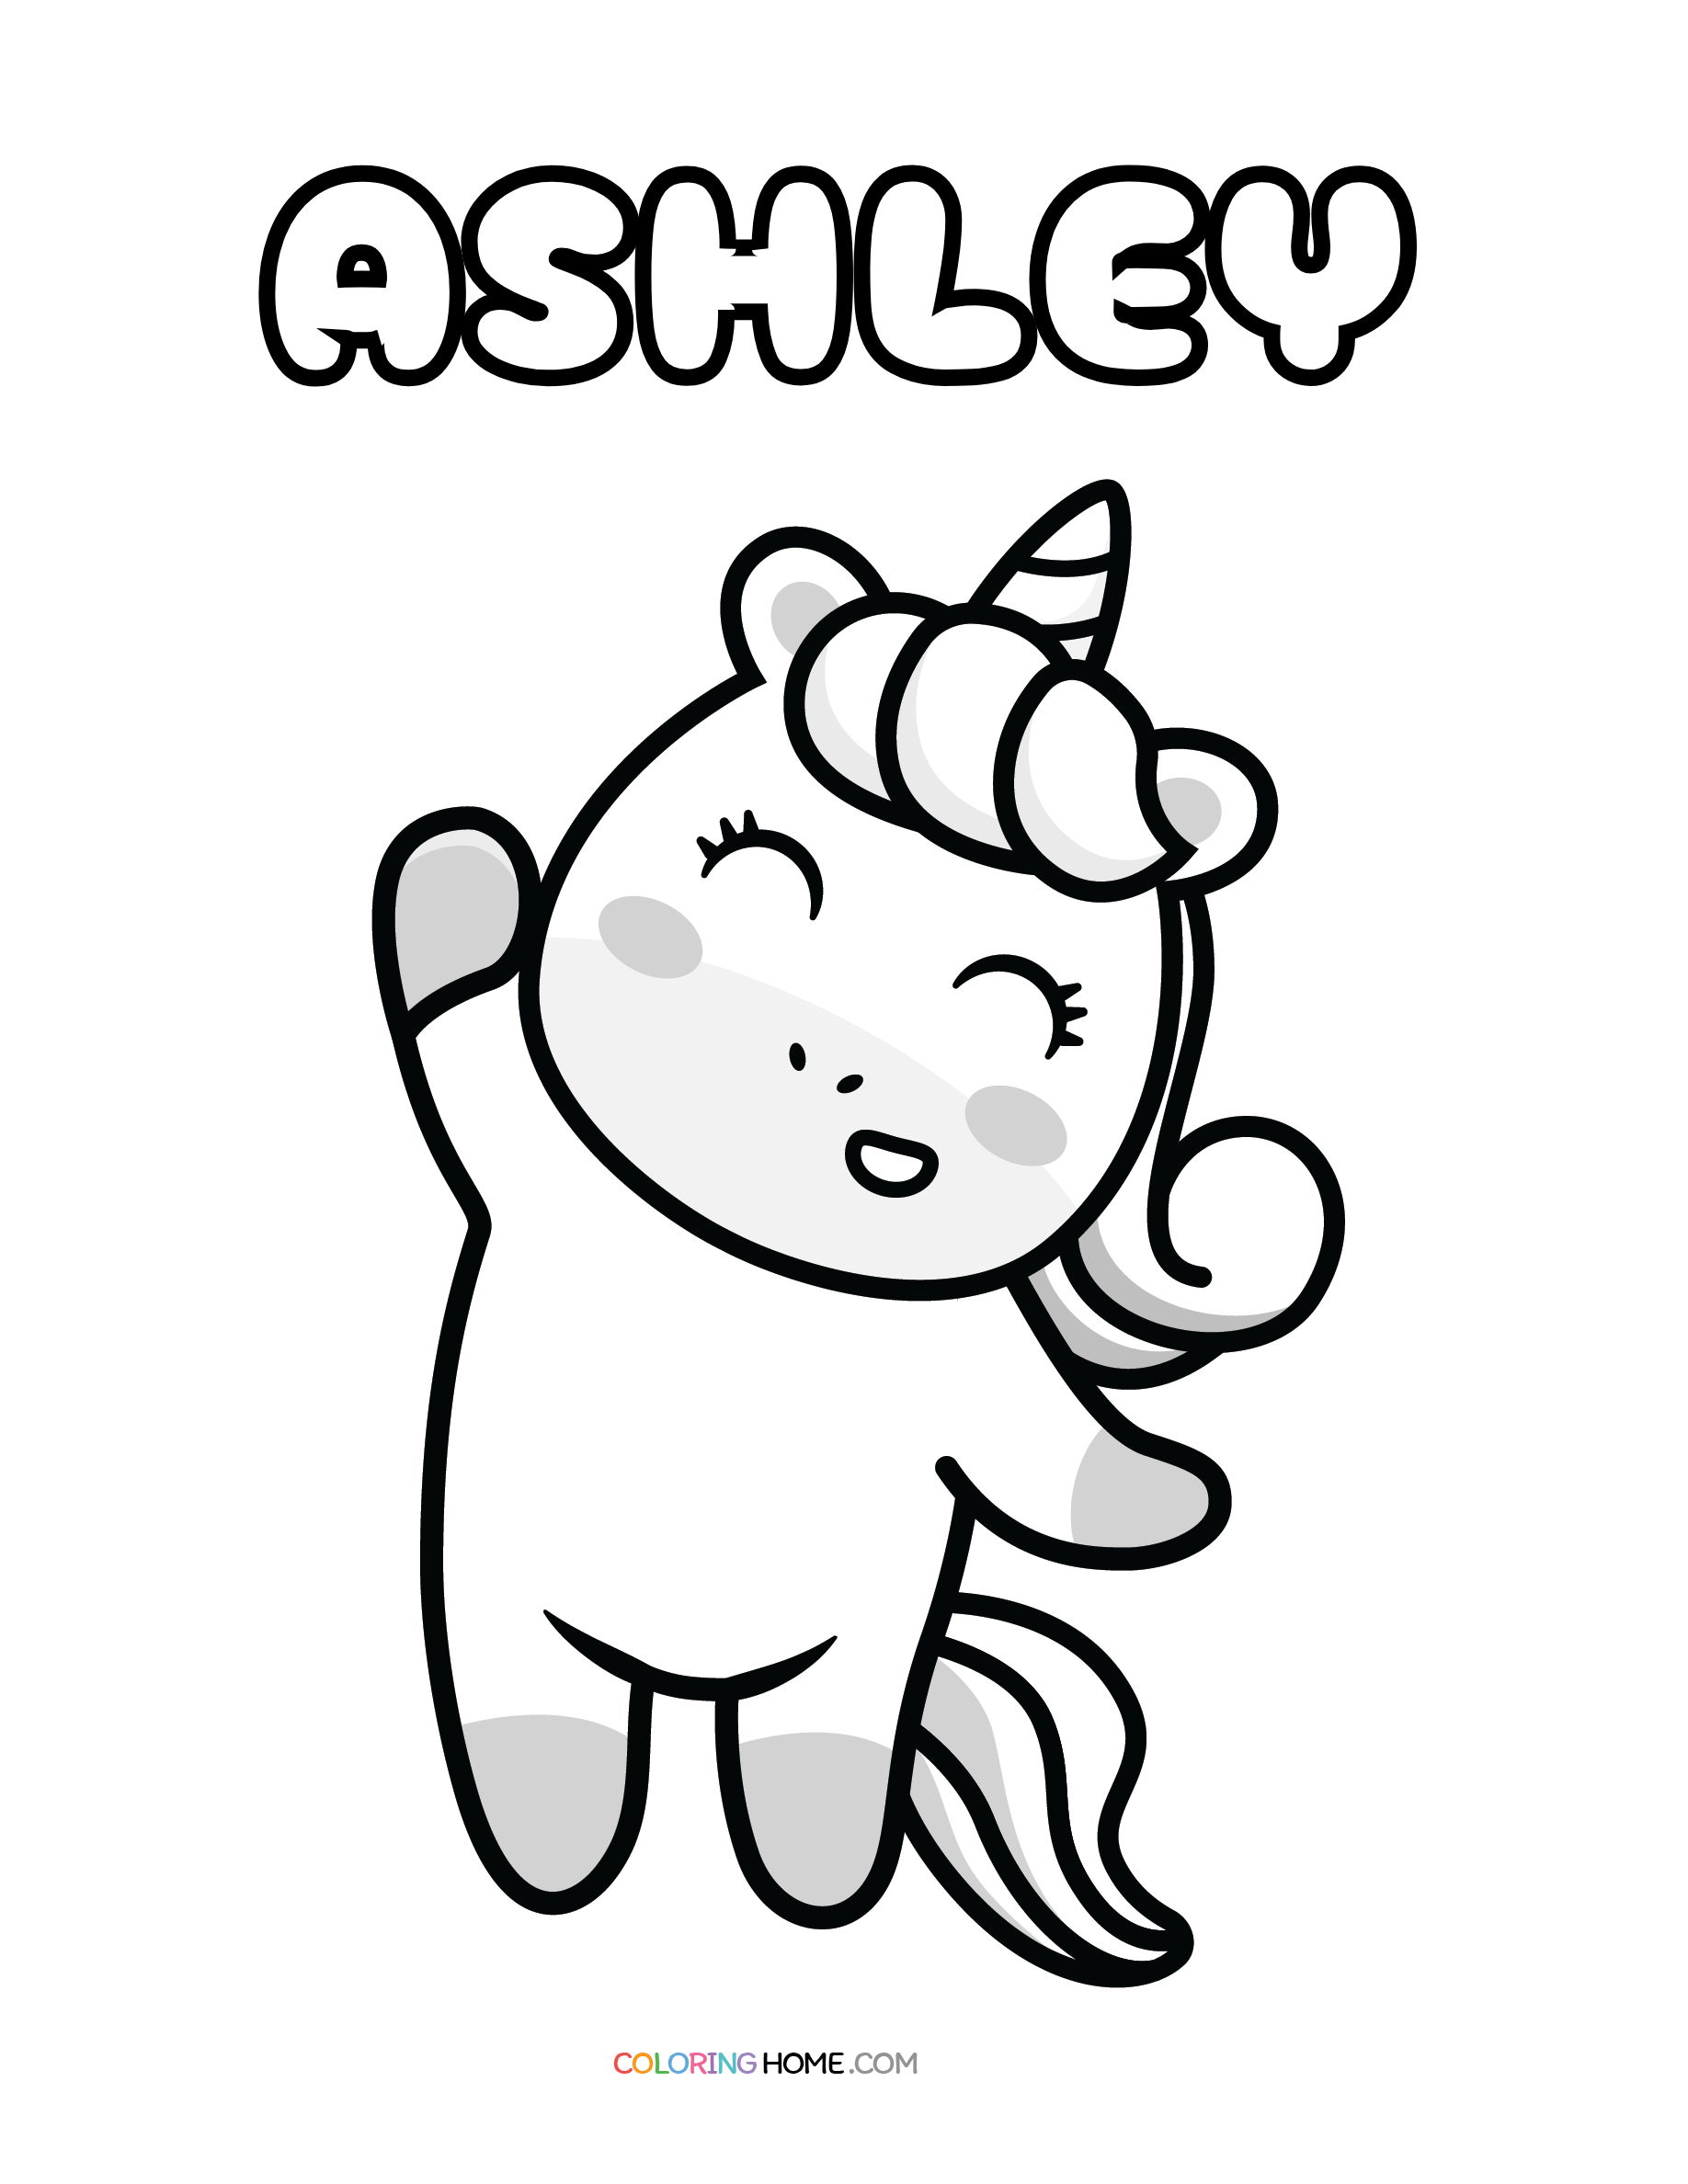 Ashley unicorn coloring page